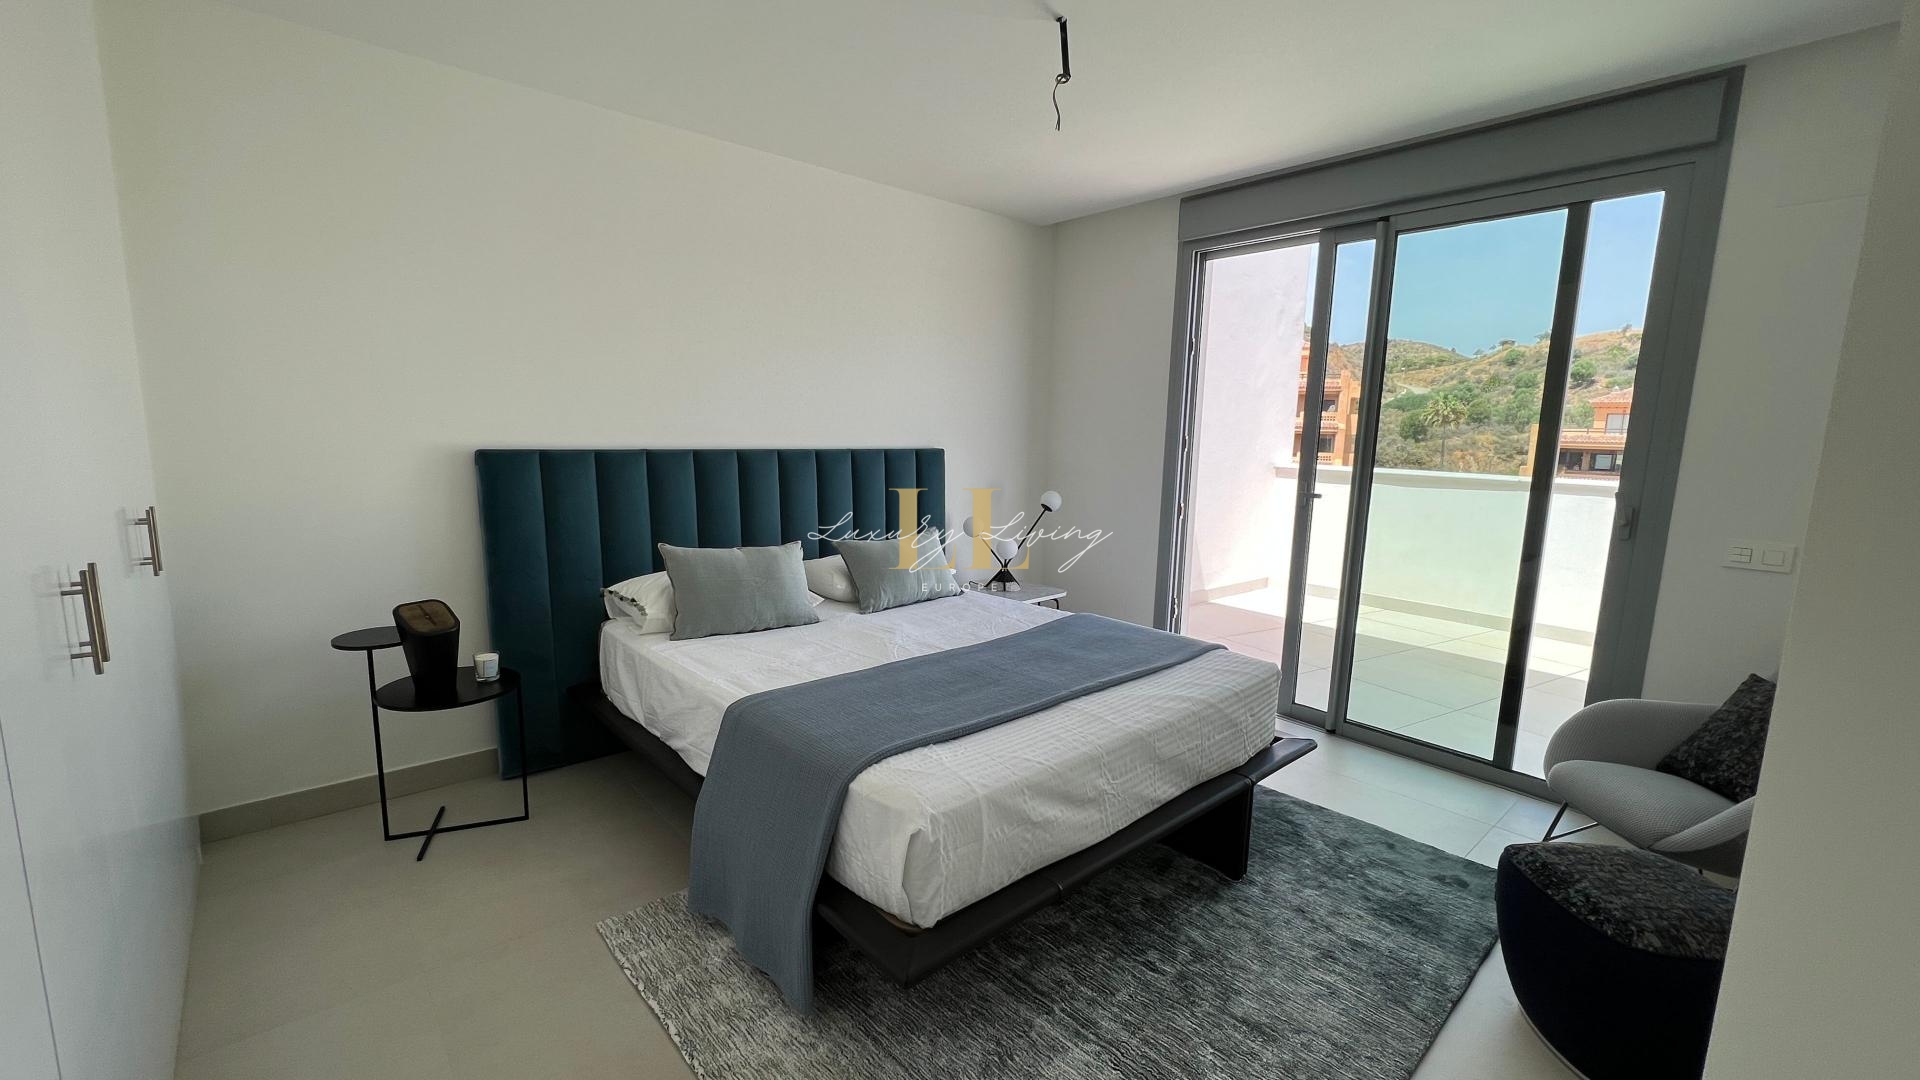 Photo of 3 Bedroom Penthouse in La Cala de Mijas